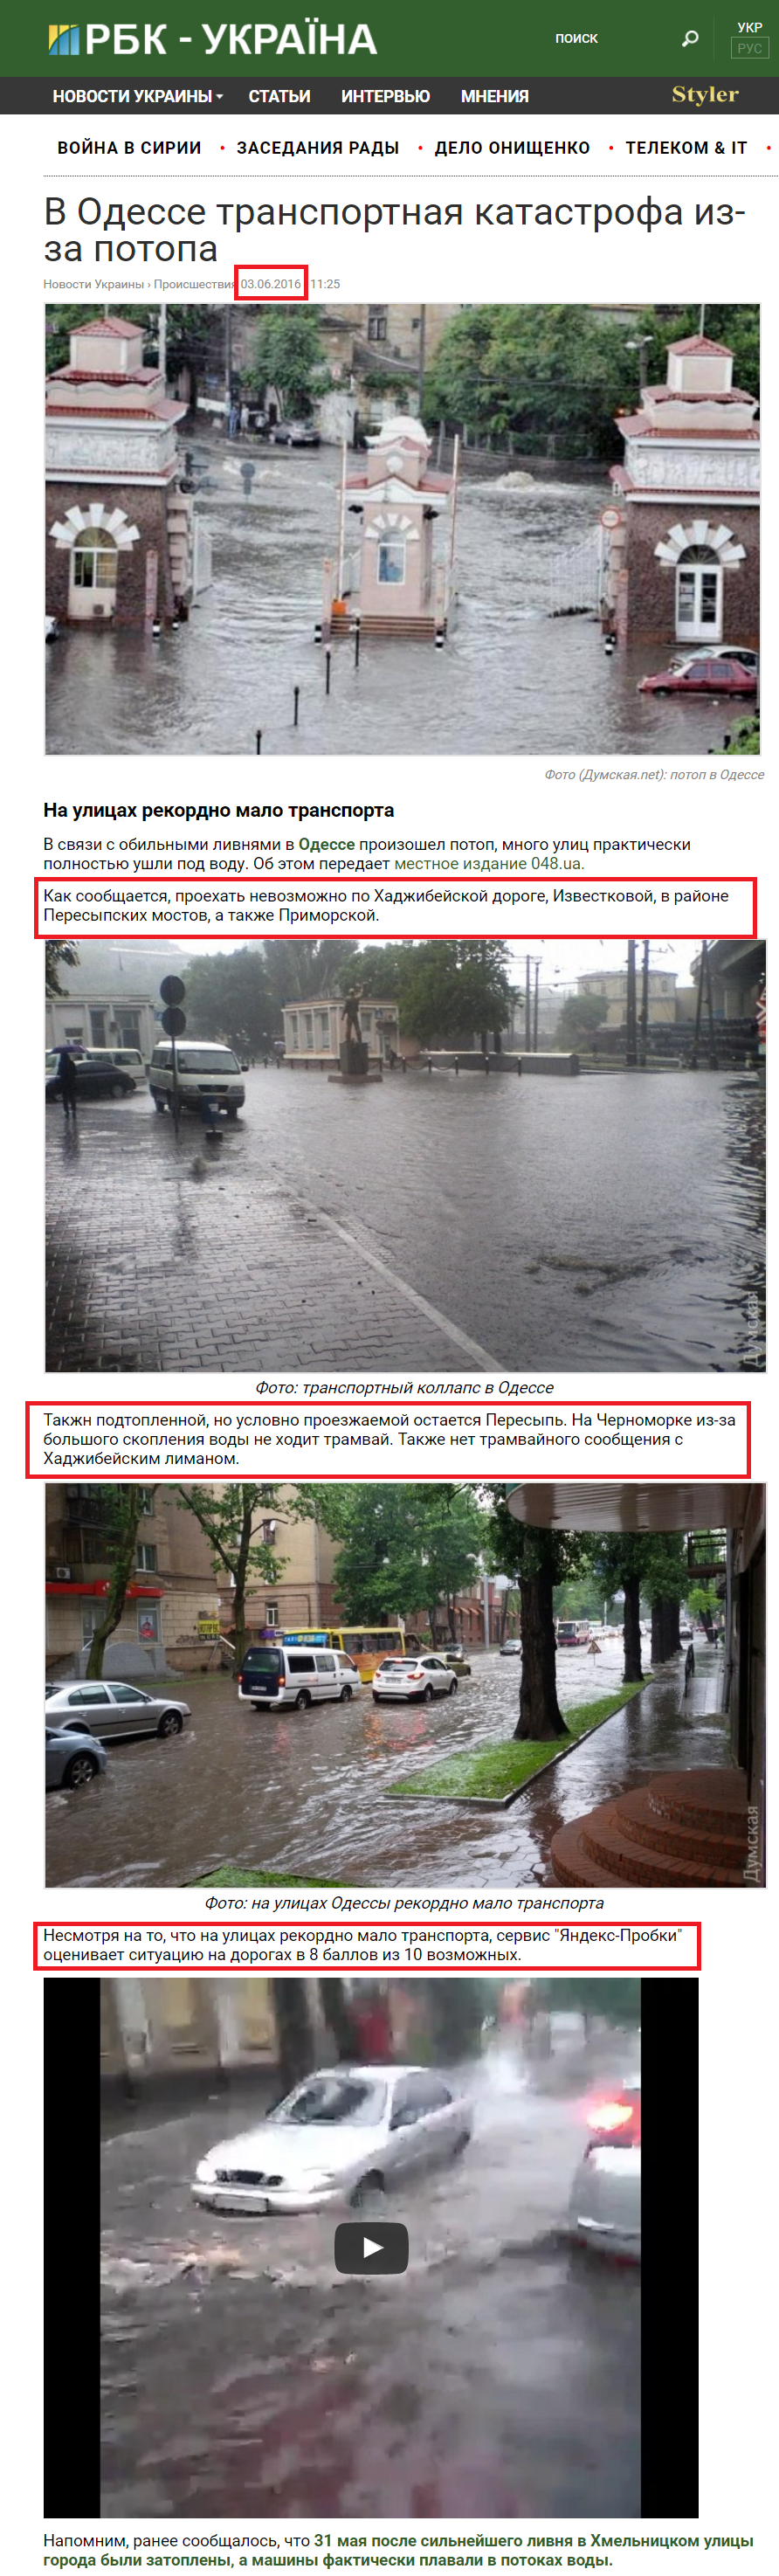 https://www.rbc.ua/rus/news/odesse-transportnaya-katastrofa-potopa--1464942275.html